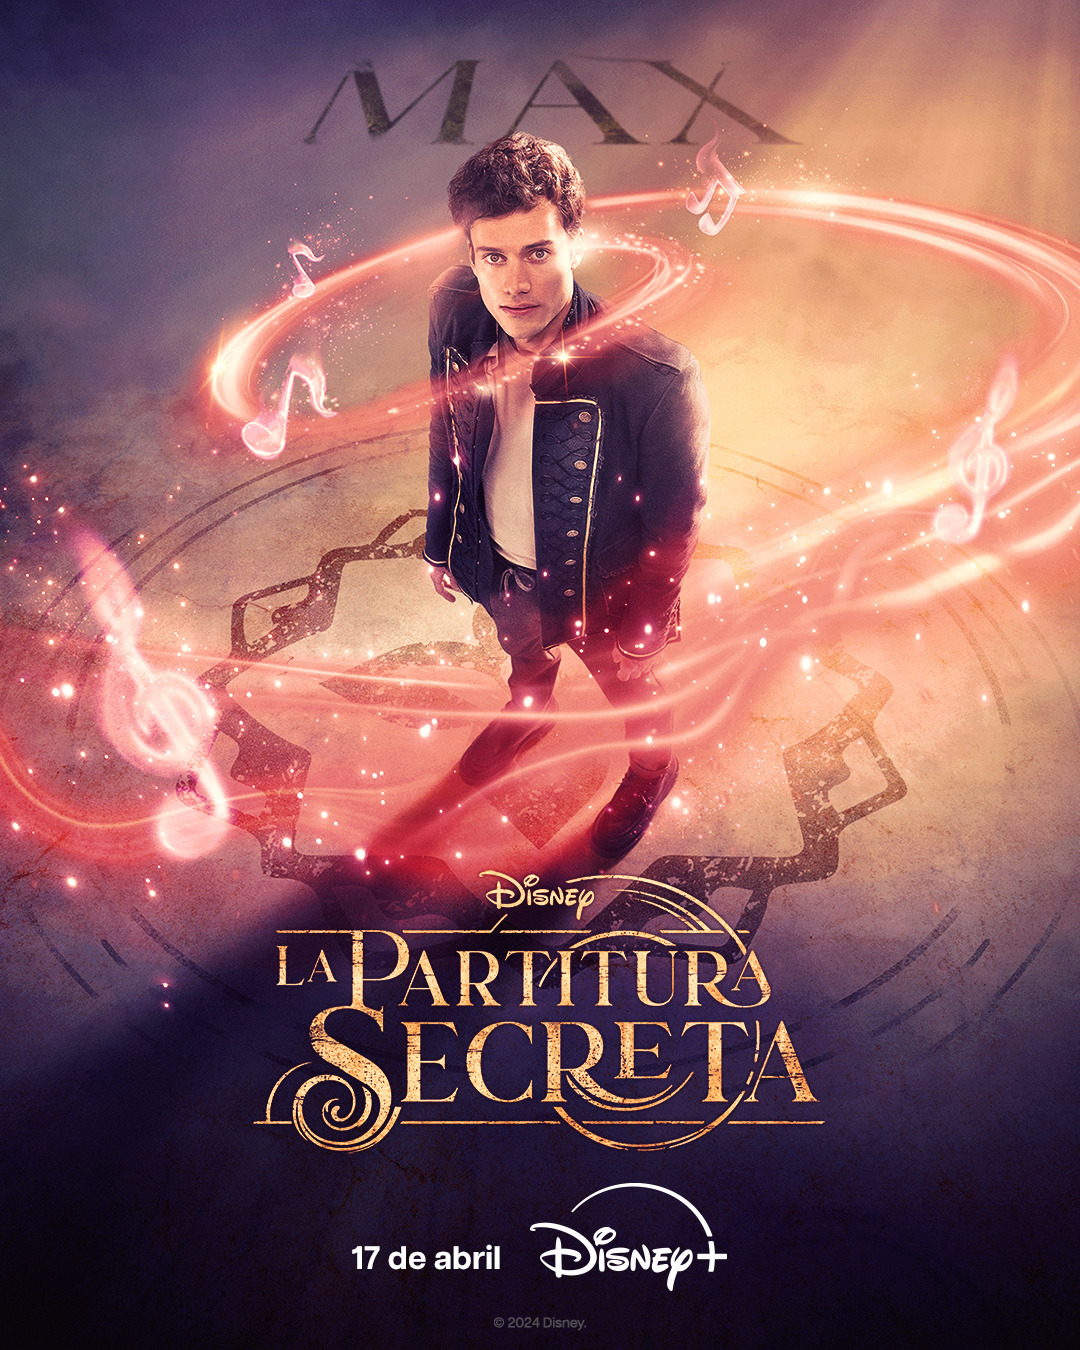 Extra Large TV Poster Image for La partitura secreta (#3 of 7)